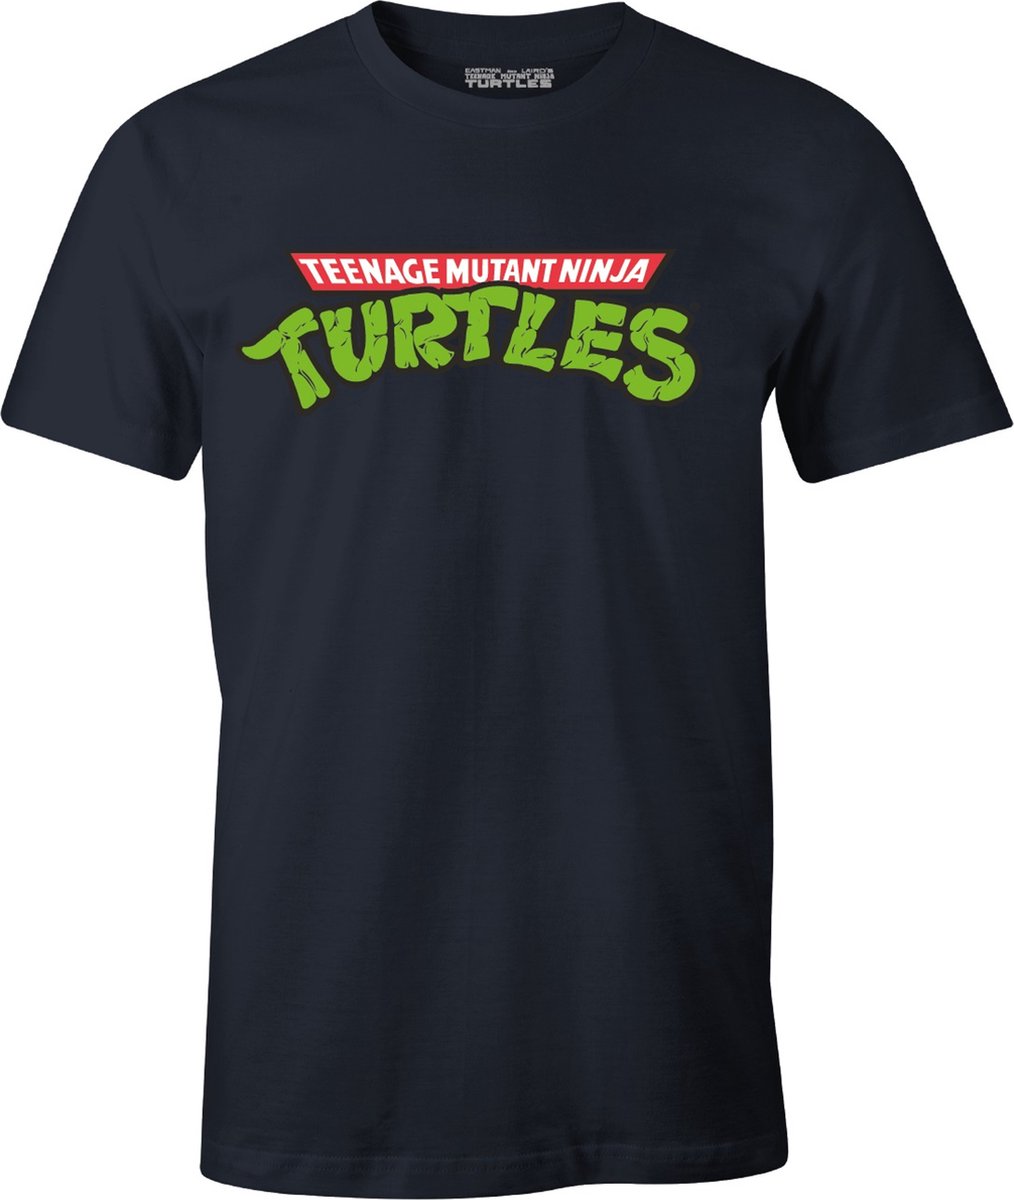 Teenage Mutant Ninja Tutles - Logo T-shirt (L)